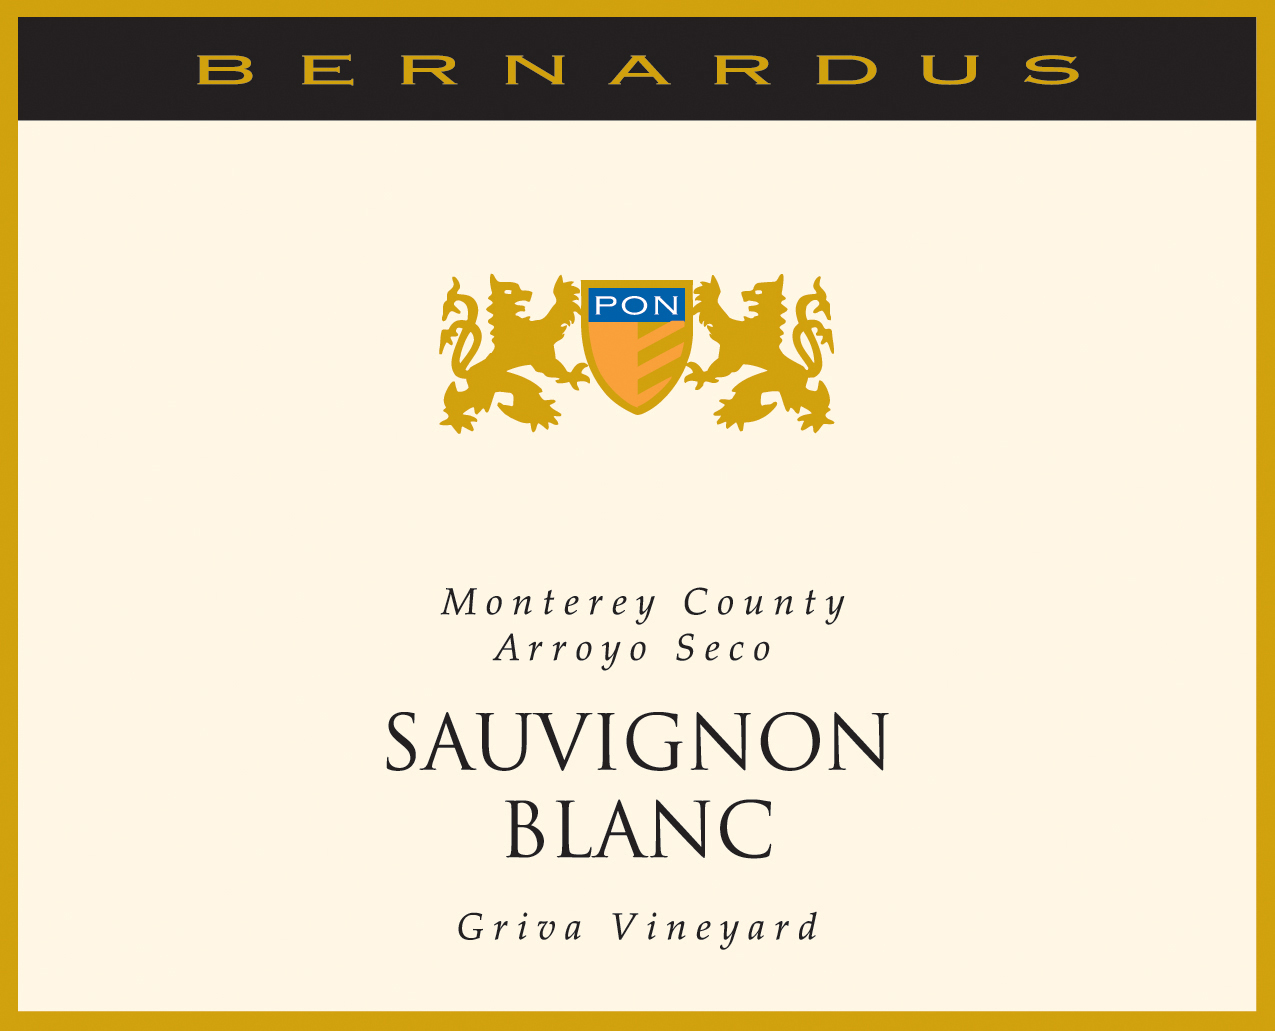 Bernardus Winery - Sauvignon Blanc - Griva Vineyard label